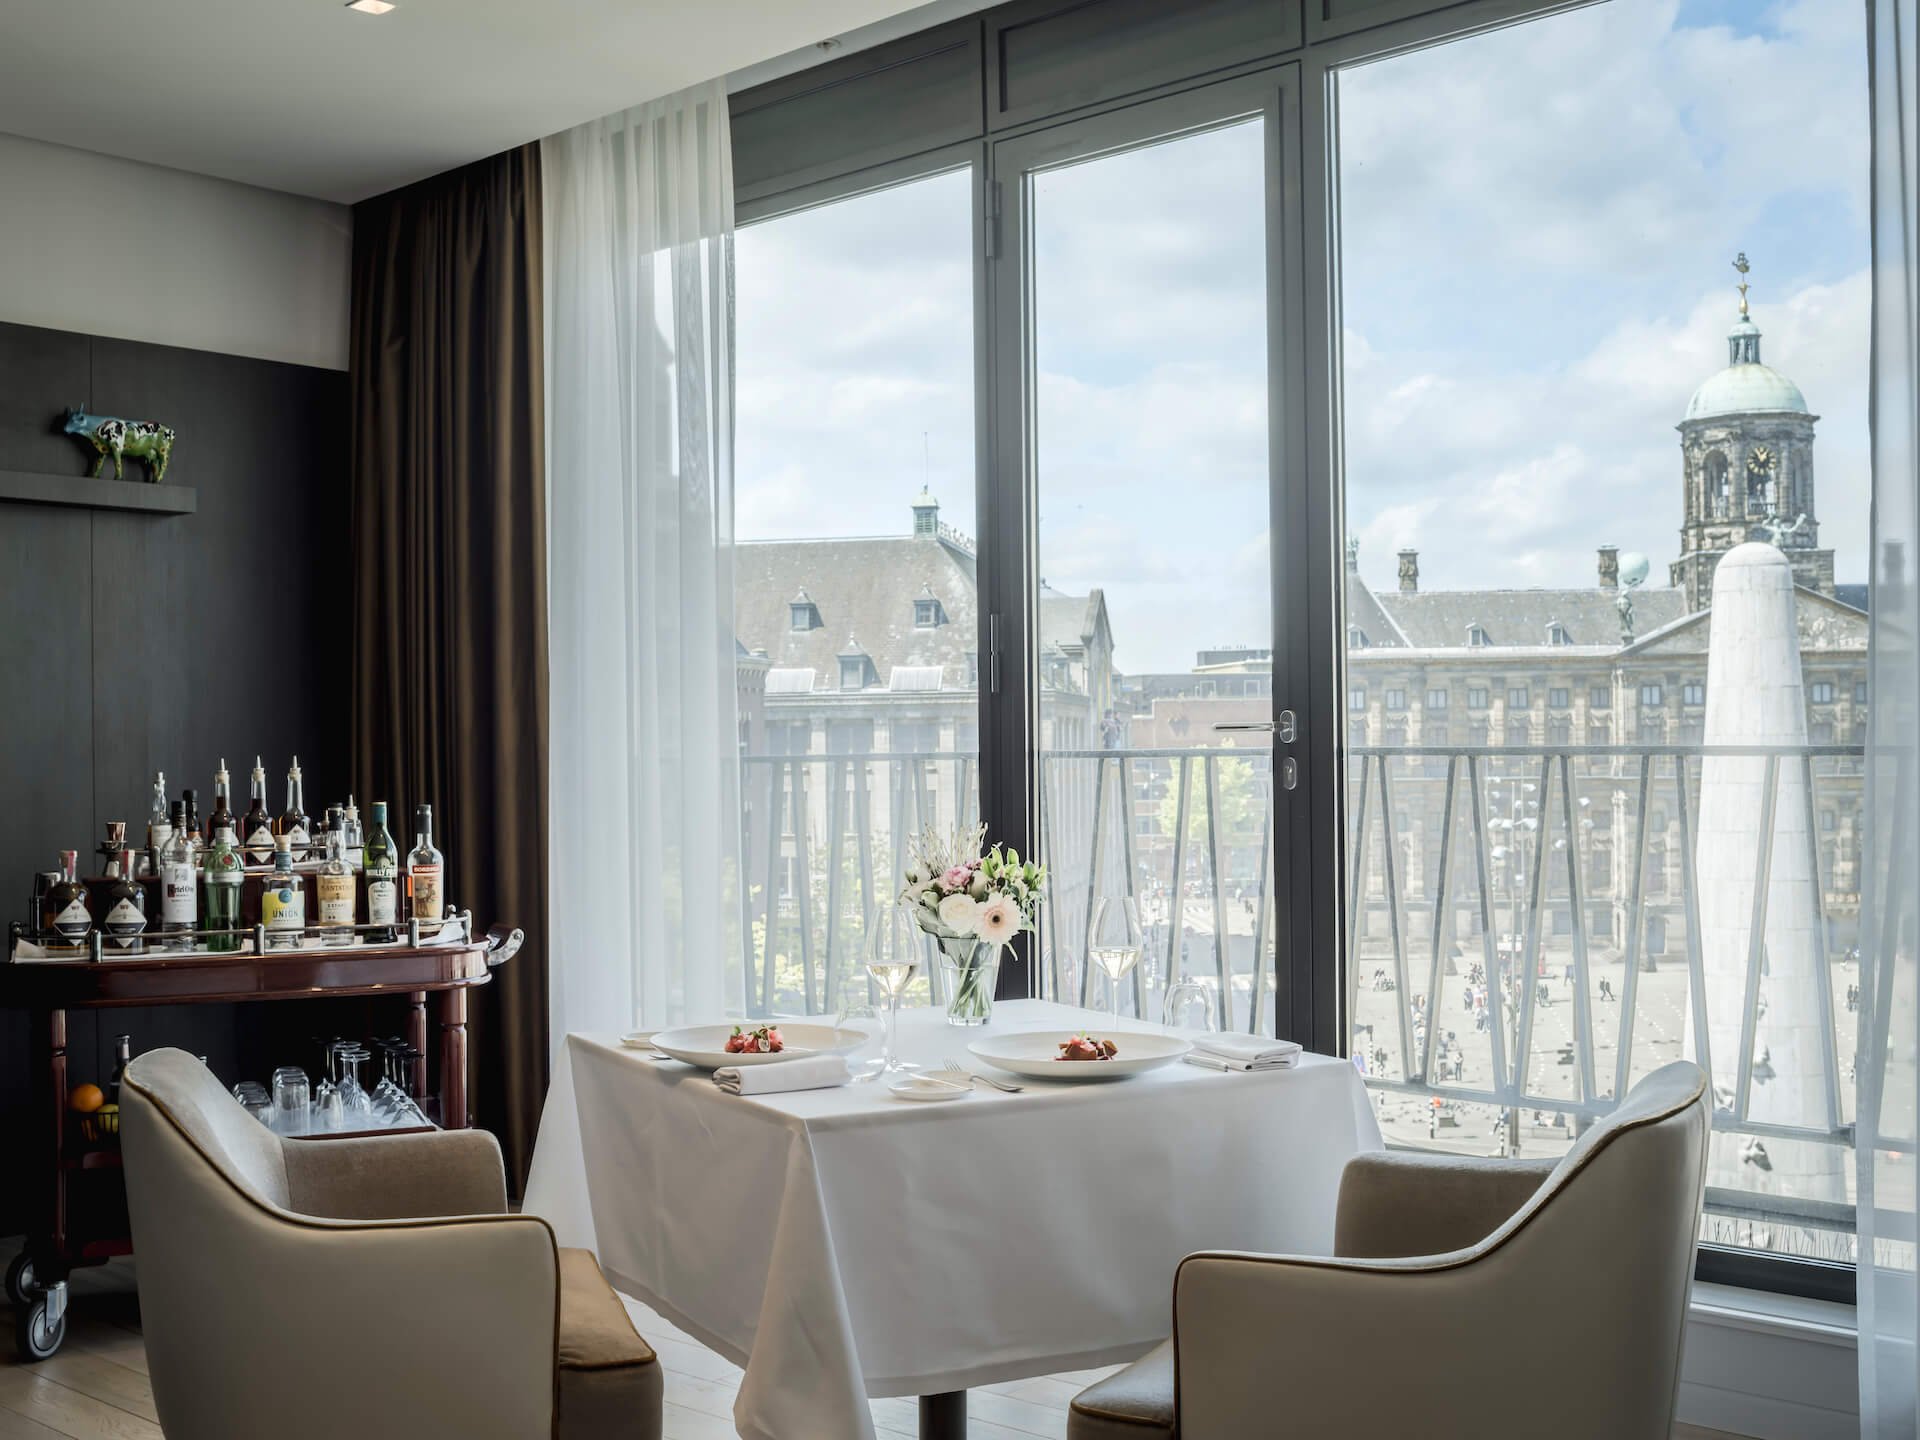 Anantara_Grand_Hotel_Krasnpolsky_Amsterdam_Restaurant_Dining_by_design_royal_suite_with_dam_view.jpg